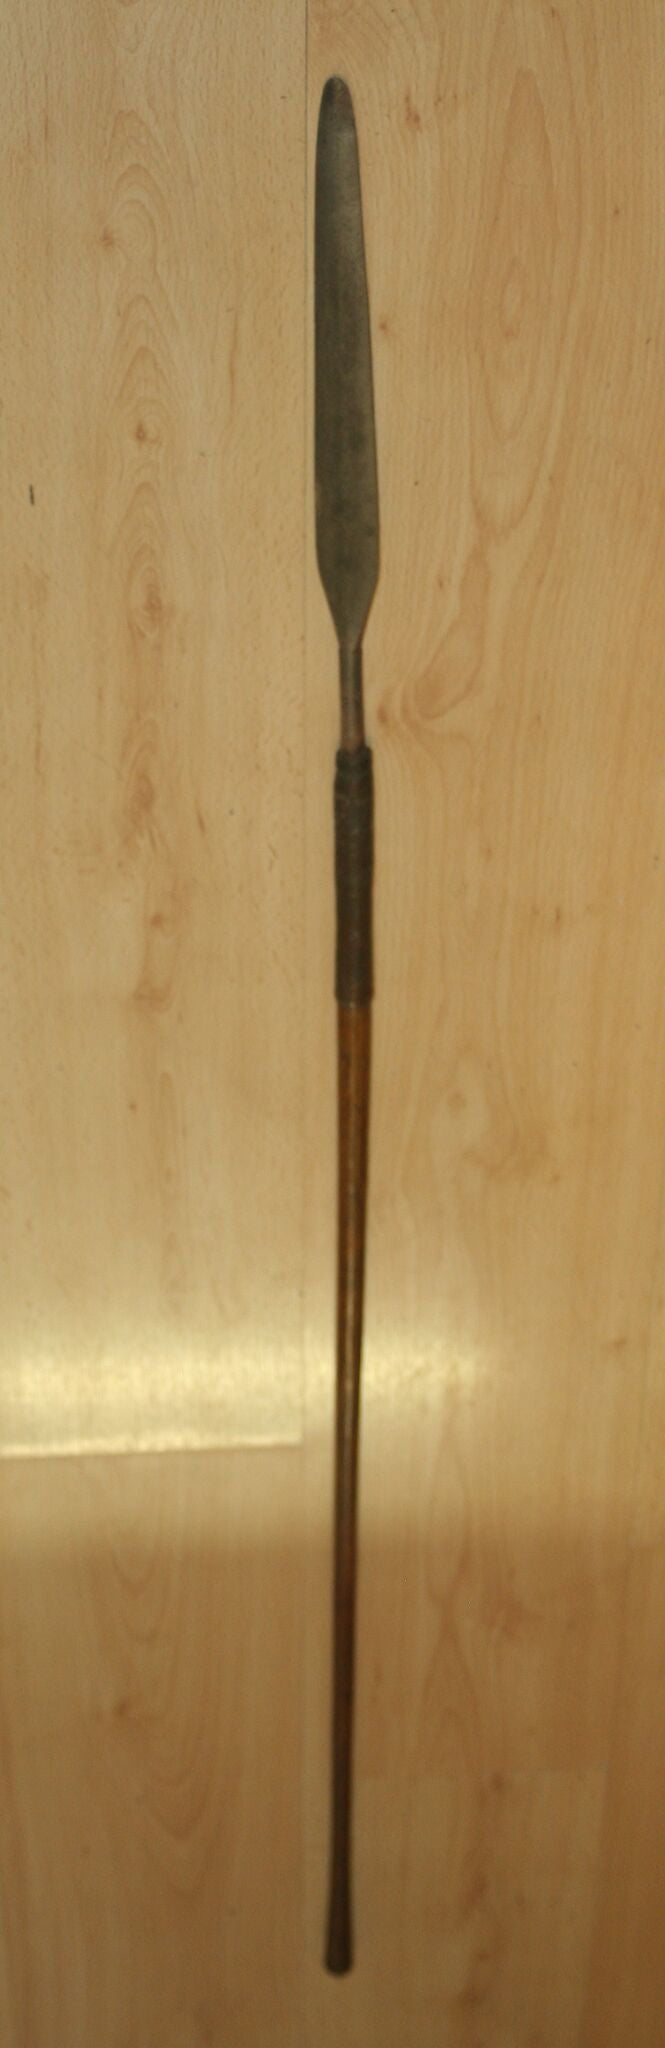 Zulu Ntlekwane, Stabbing Spear - Collected by Lt. John Gawne during Anglo-Zulu War